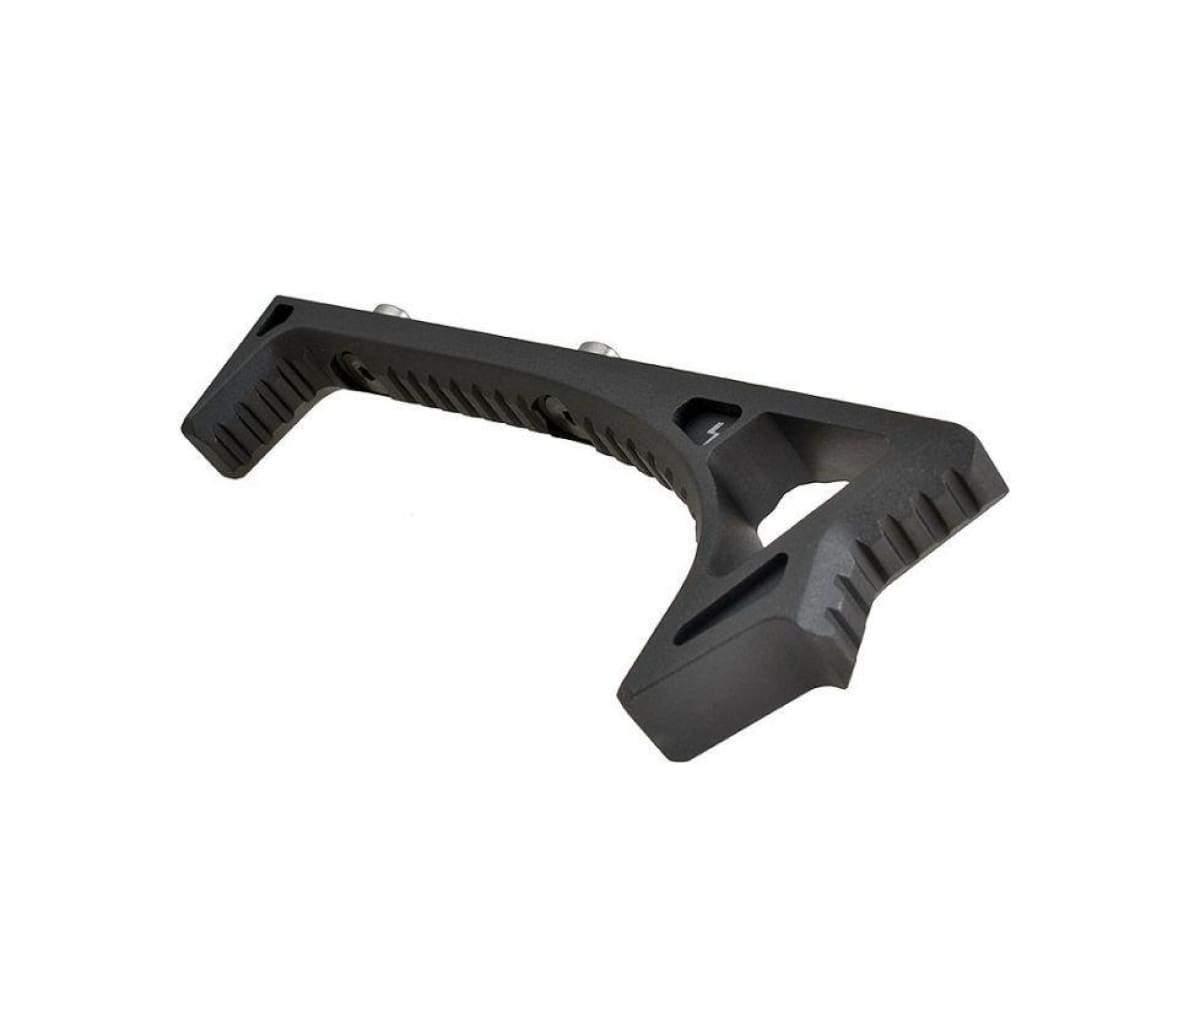 Metal Foregrip Link Curved Angled Front Grip Fit KeyMod/M-lok Handguard Rail B/R 